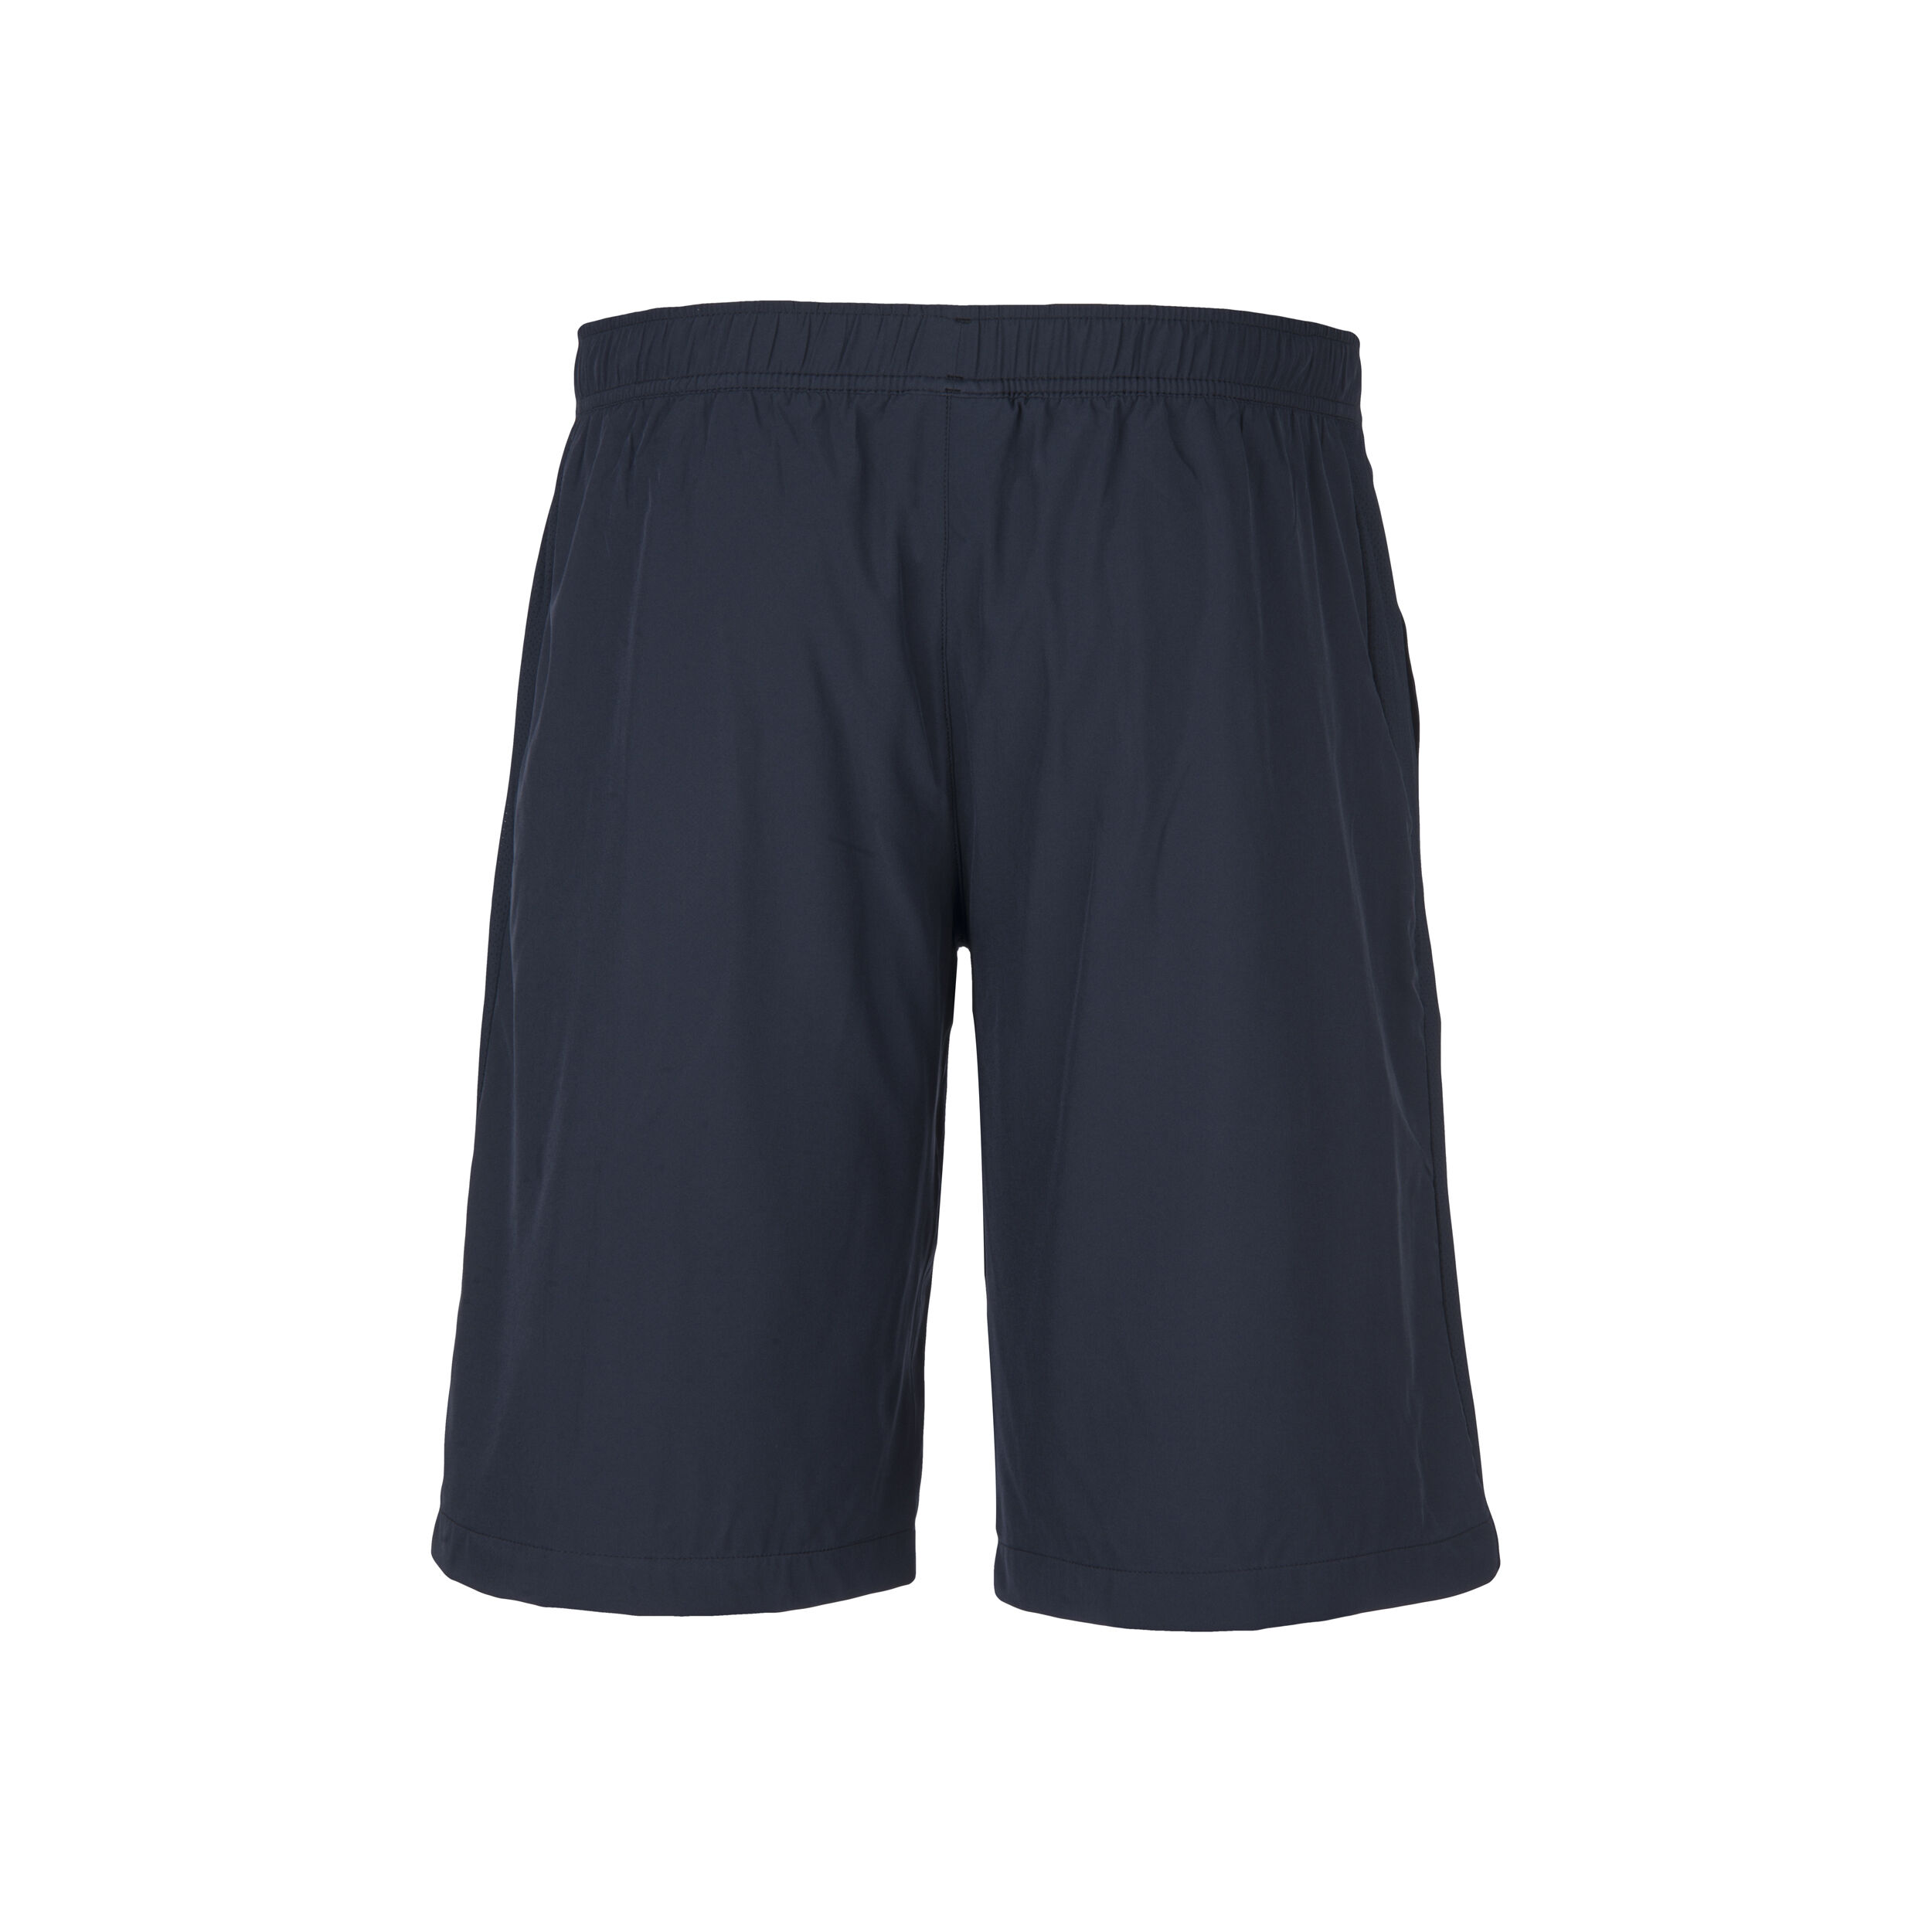 Dunlop Herren Woven Short  Shorts dunkelblau NEU 